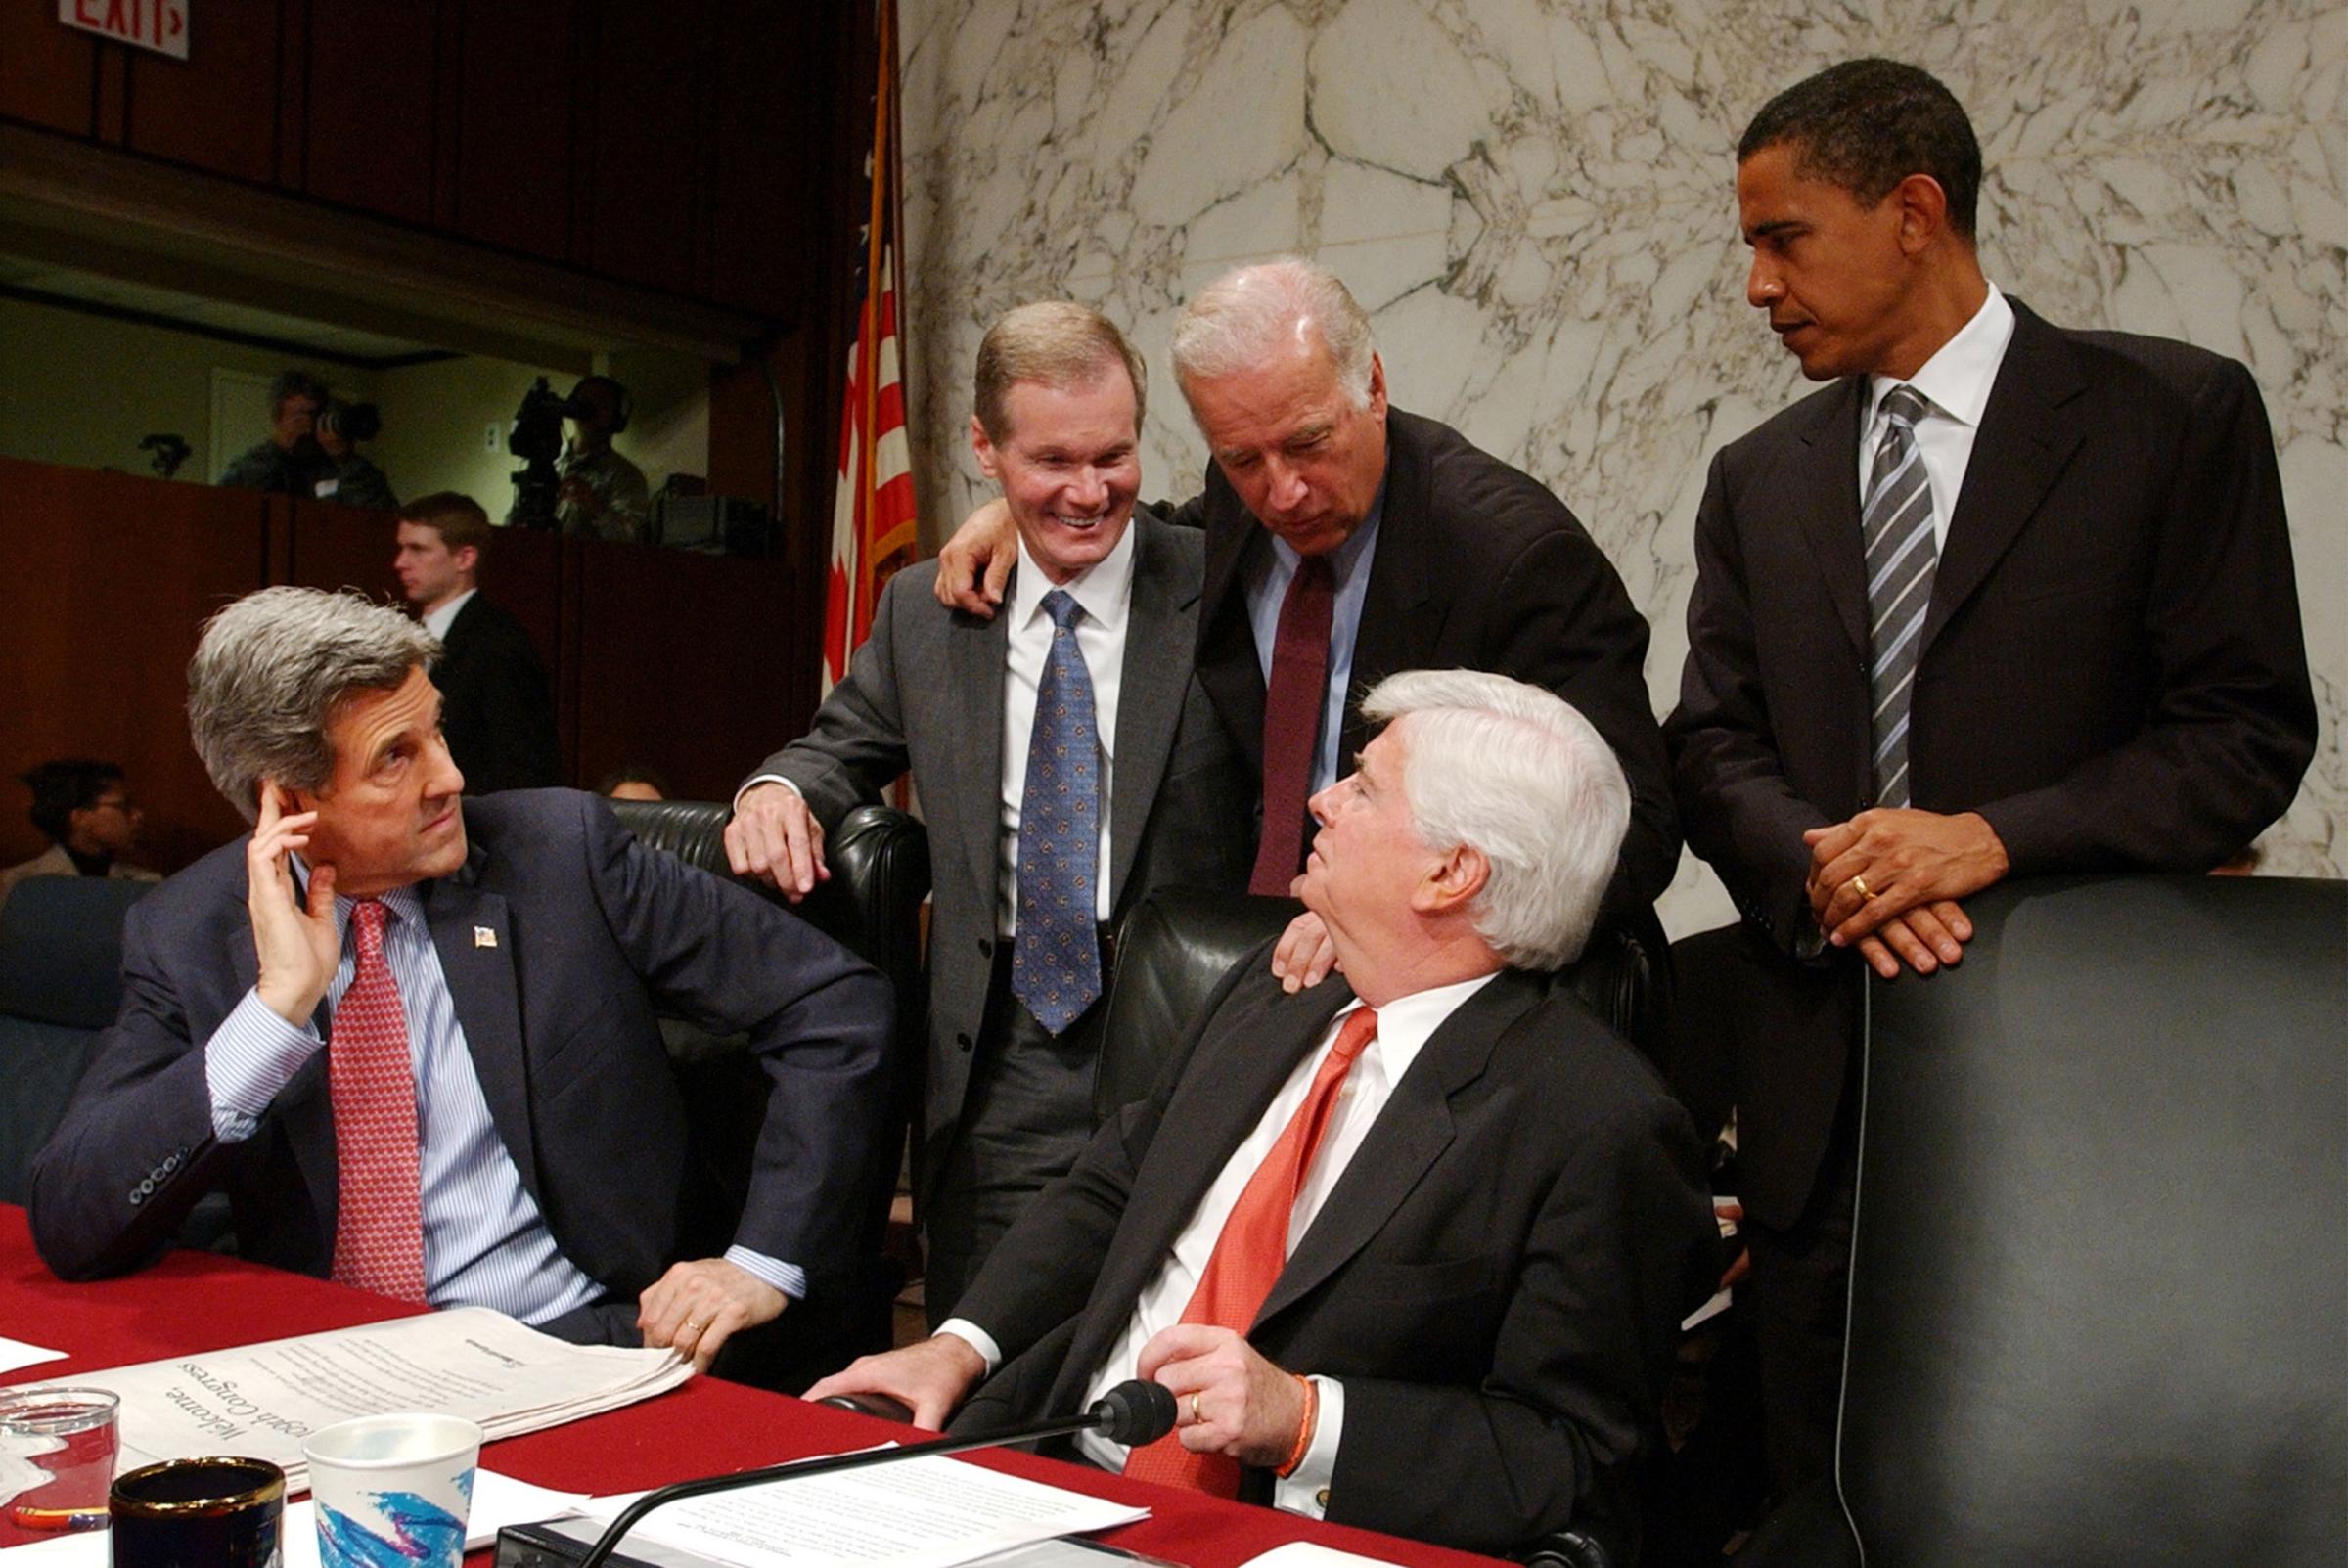 Senator John Kerry, Senator Ben Nelson, Senator Joseph Biden, Senator Christopher Dodd, seated, and Senator Barack Obama.